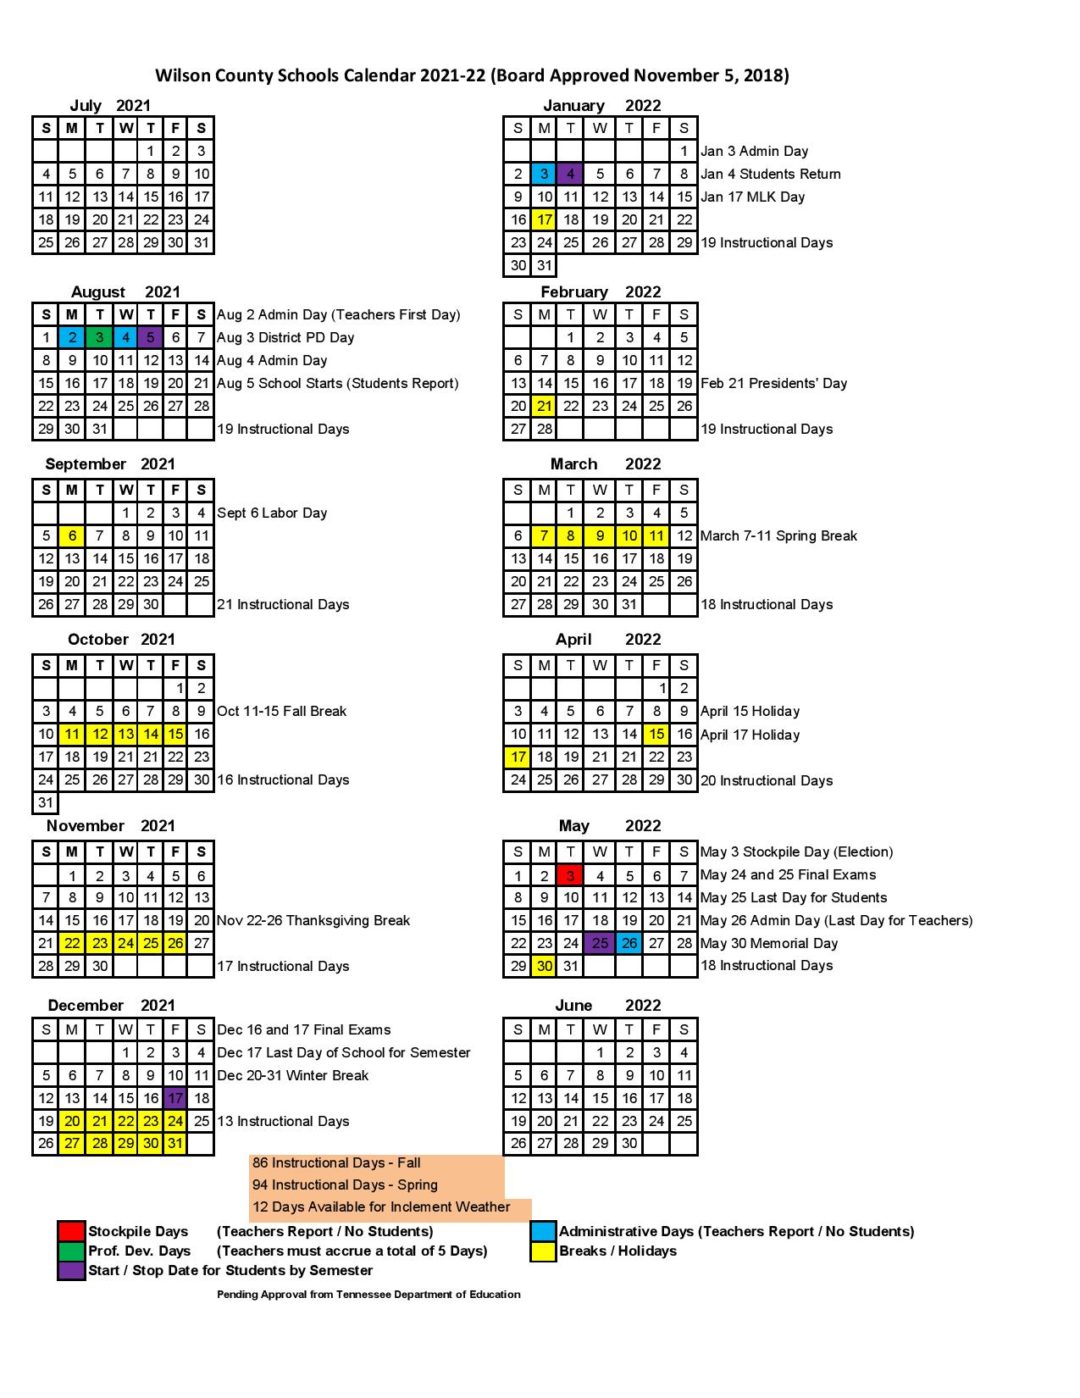 wilson-county-schools-calendar-2021-2022-in-pdf